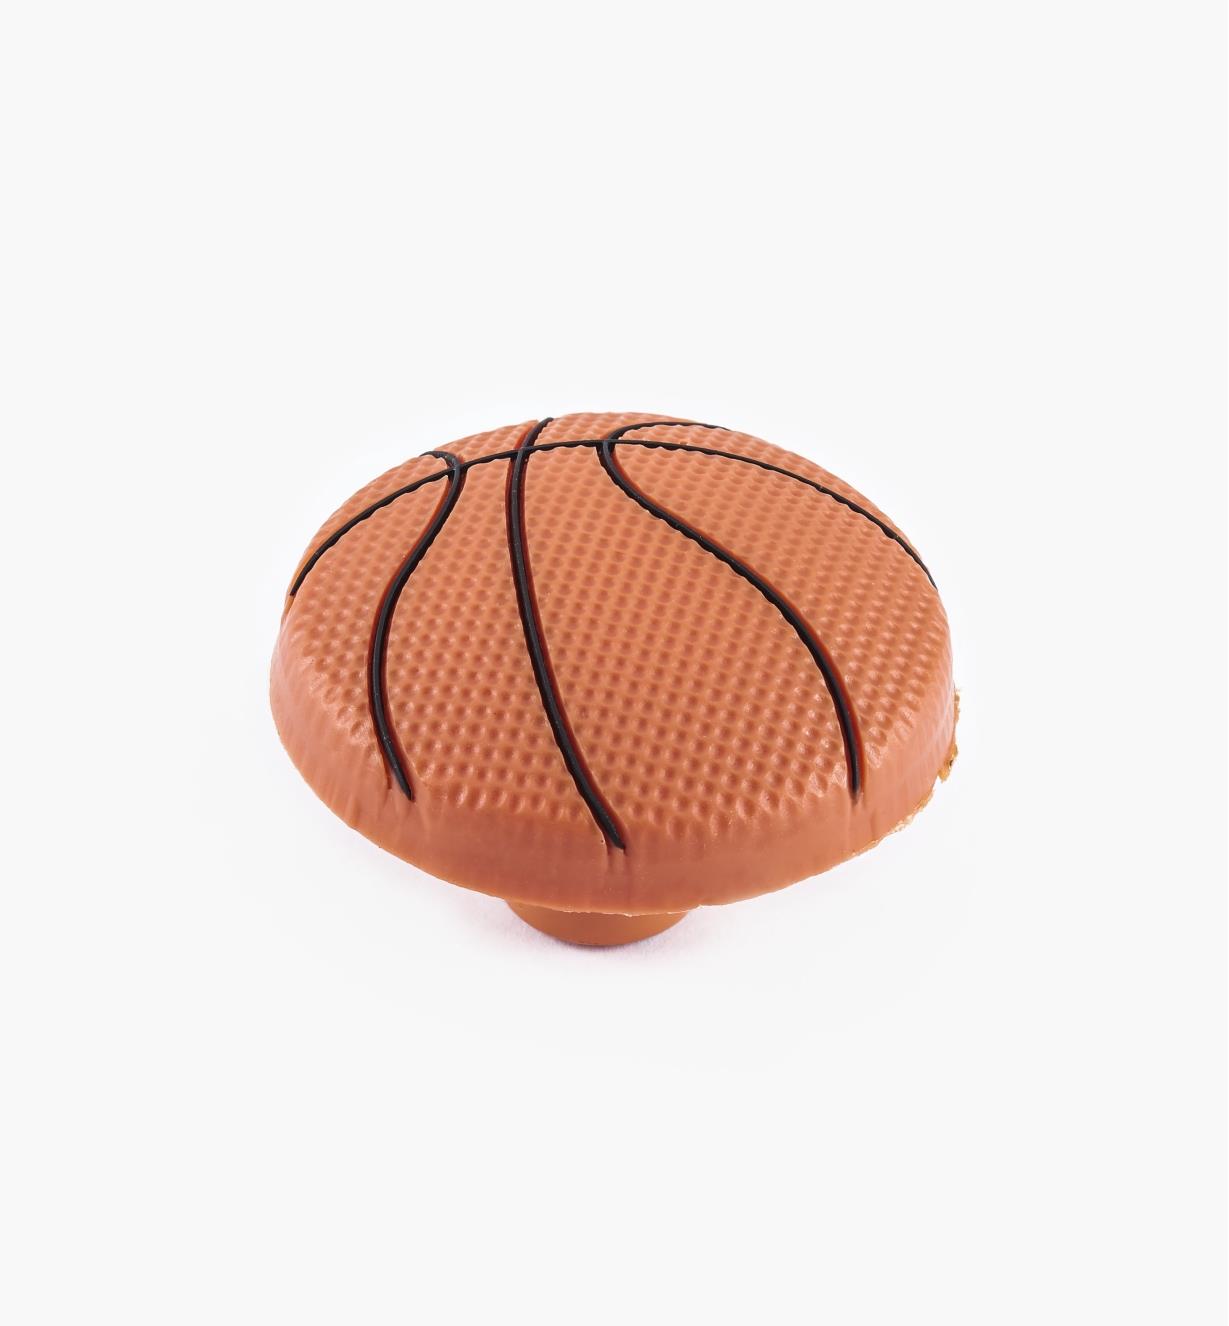 00W5610 - Basketball Knob